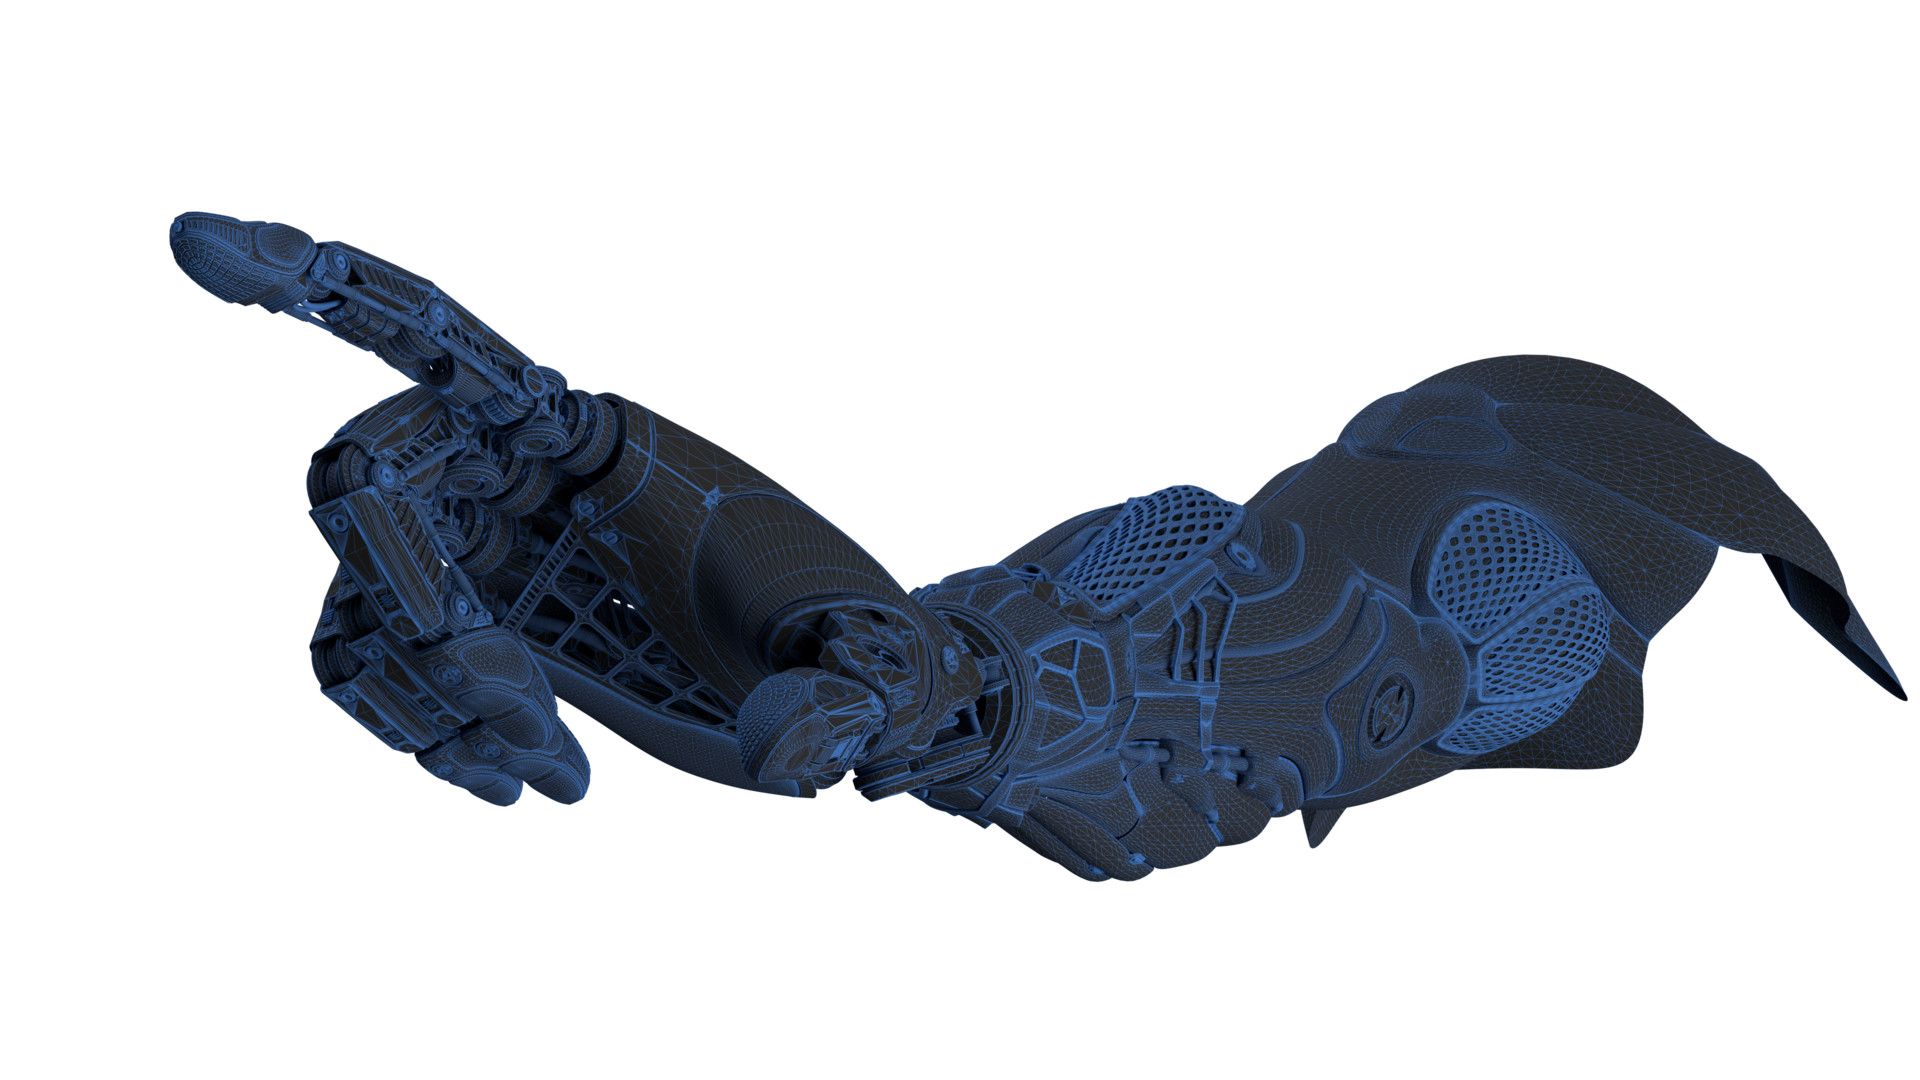 Highly detailed 3d model of robot's arm made with blender 2.78. Wireframe render